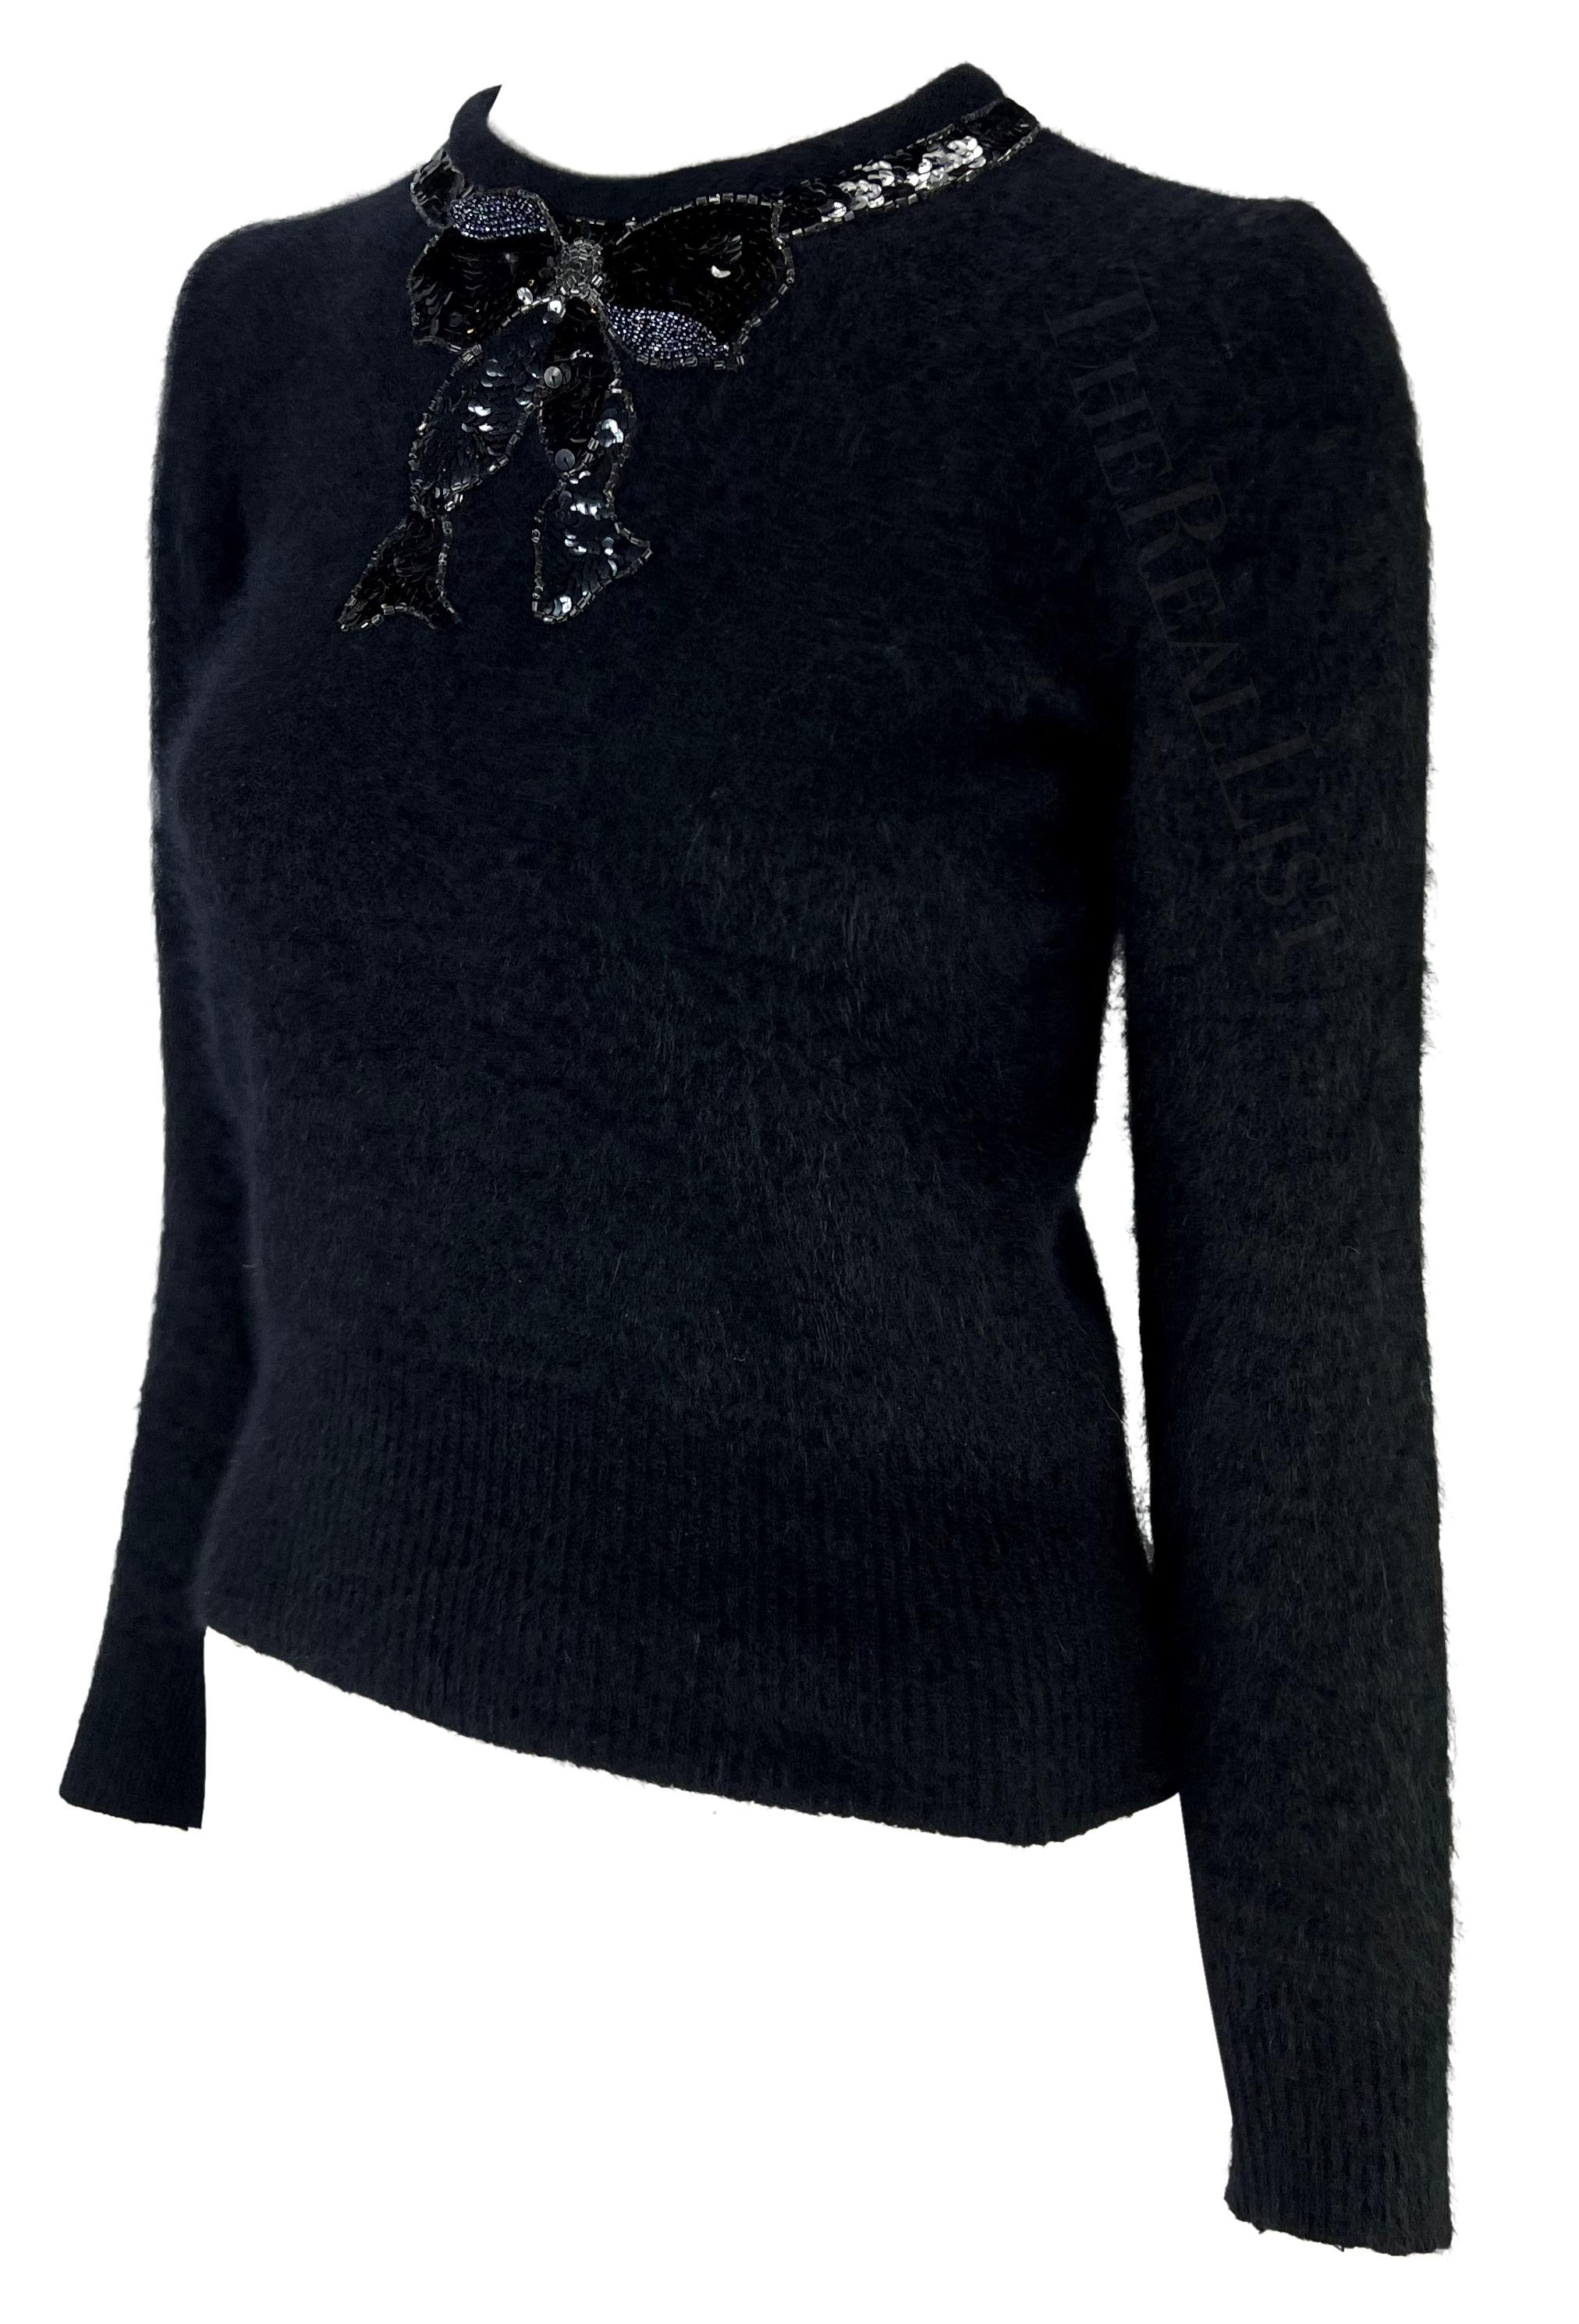 1980 Gucci Black Knit Sequin Beaded Bow Collar Angora Sweater Bon état à West Hollywood, CA